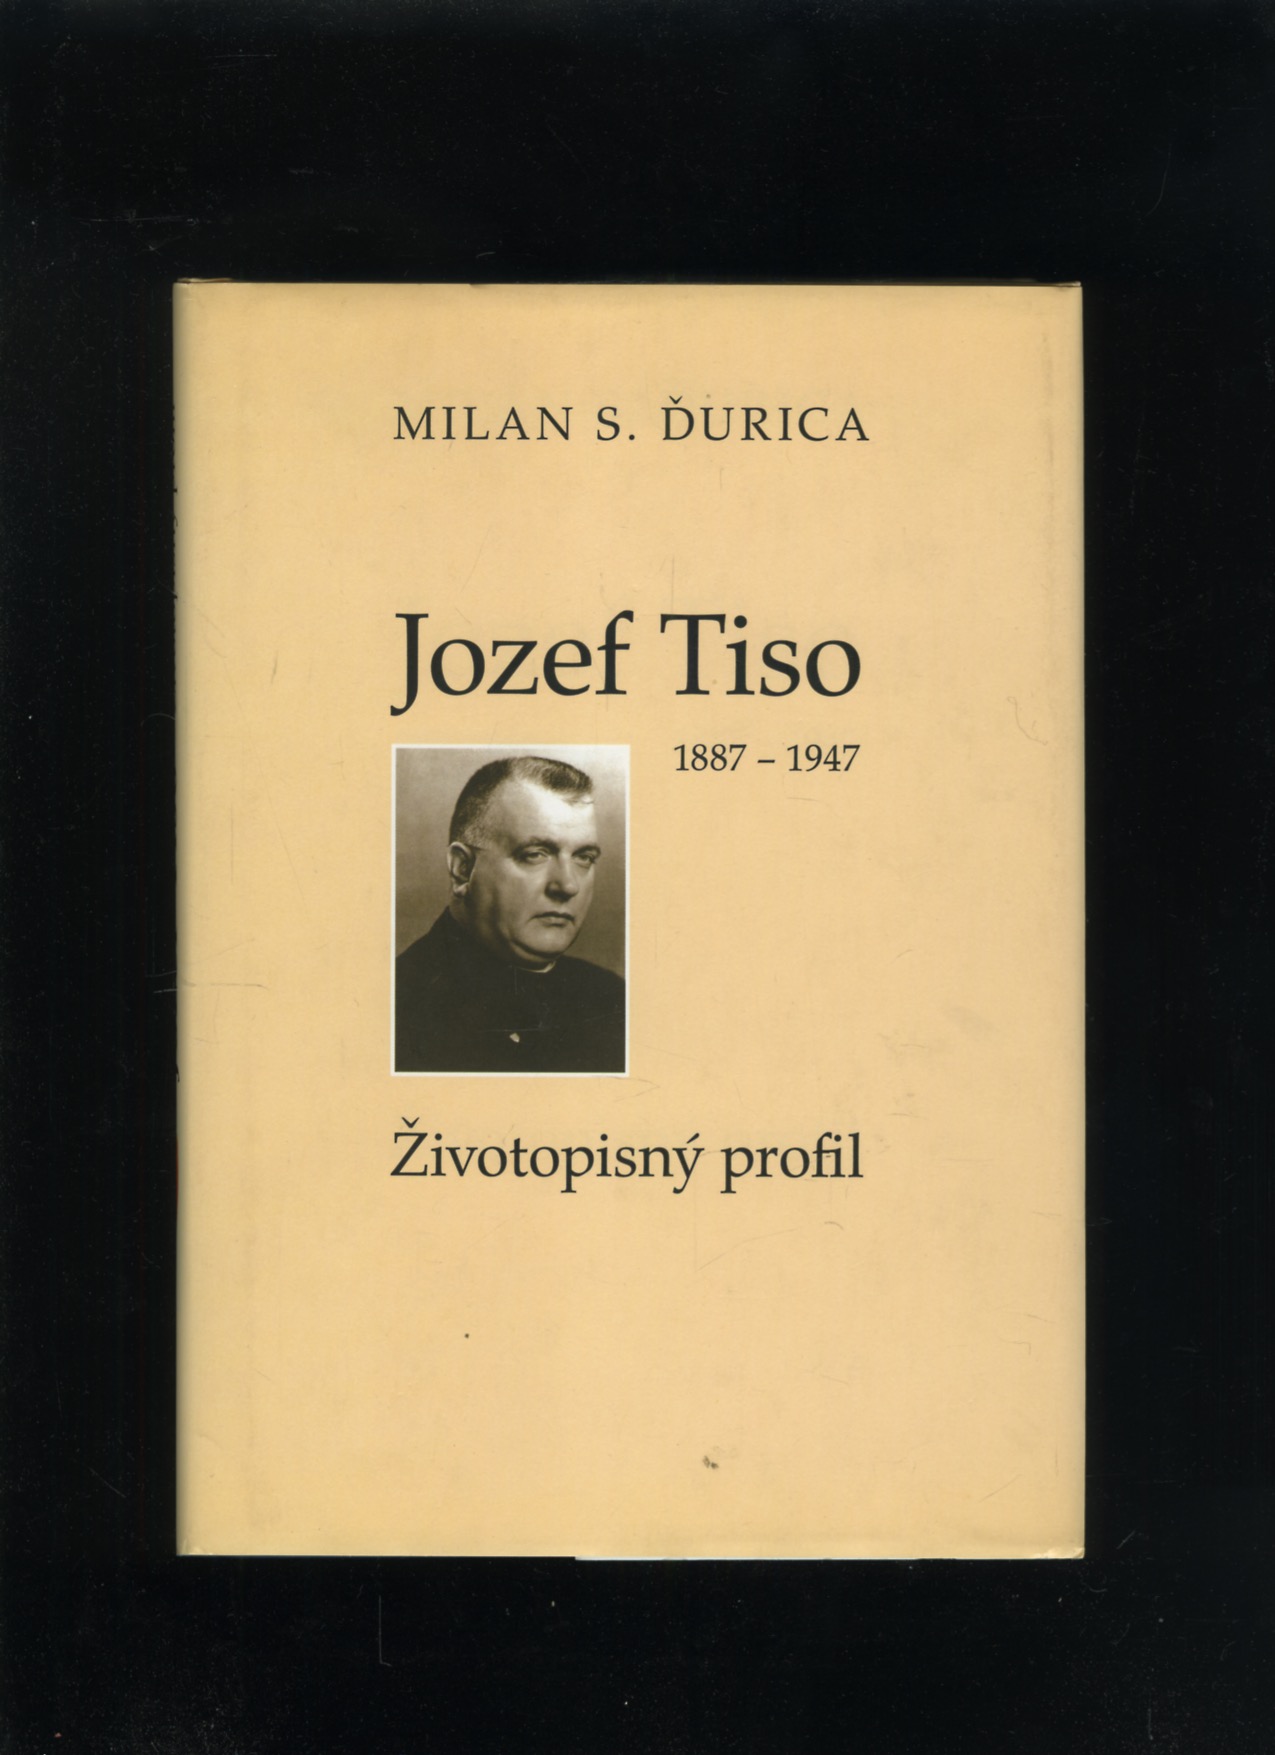 Jozef Tiso 1887 - 1947 (Milan S. Ďurica)